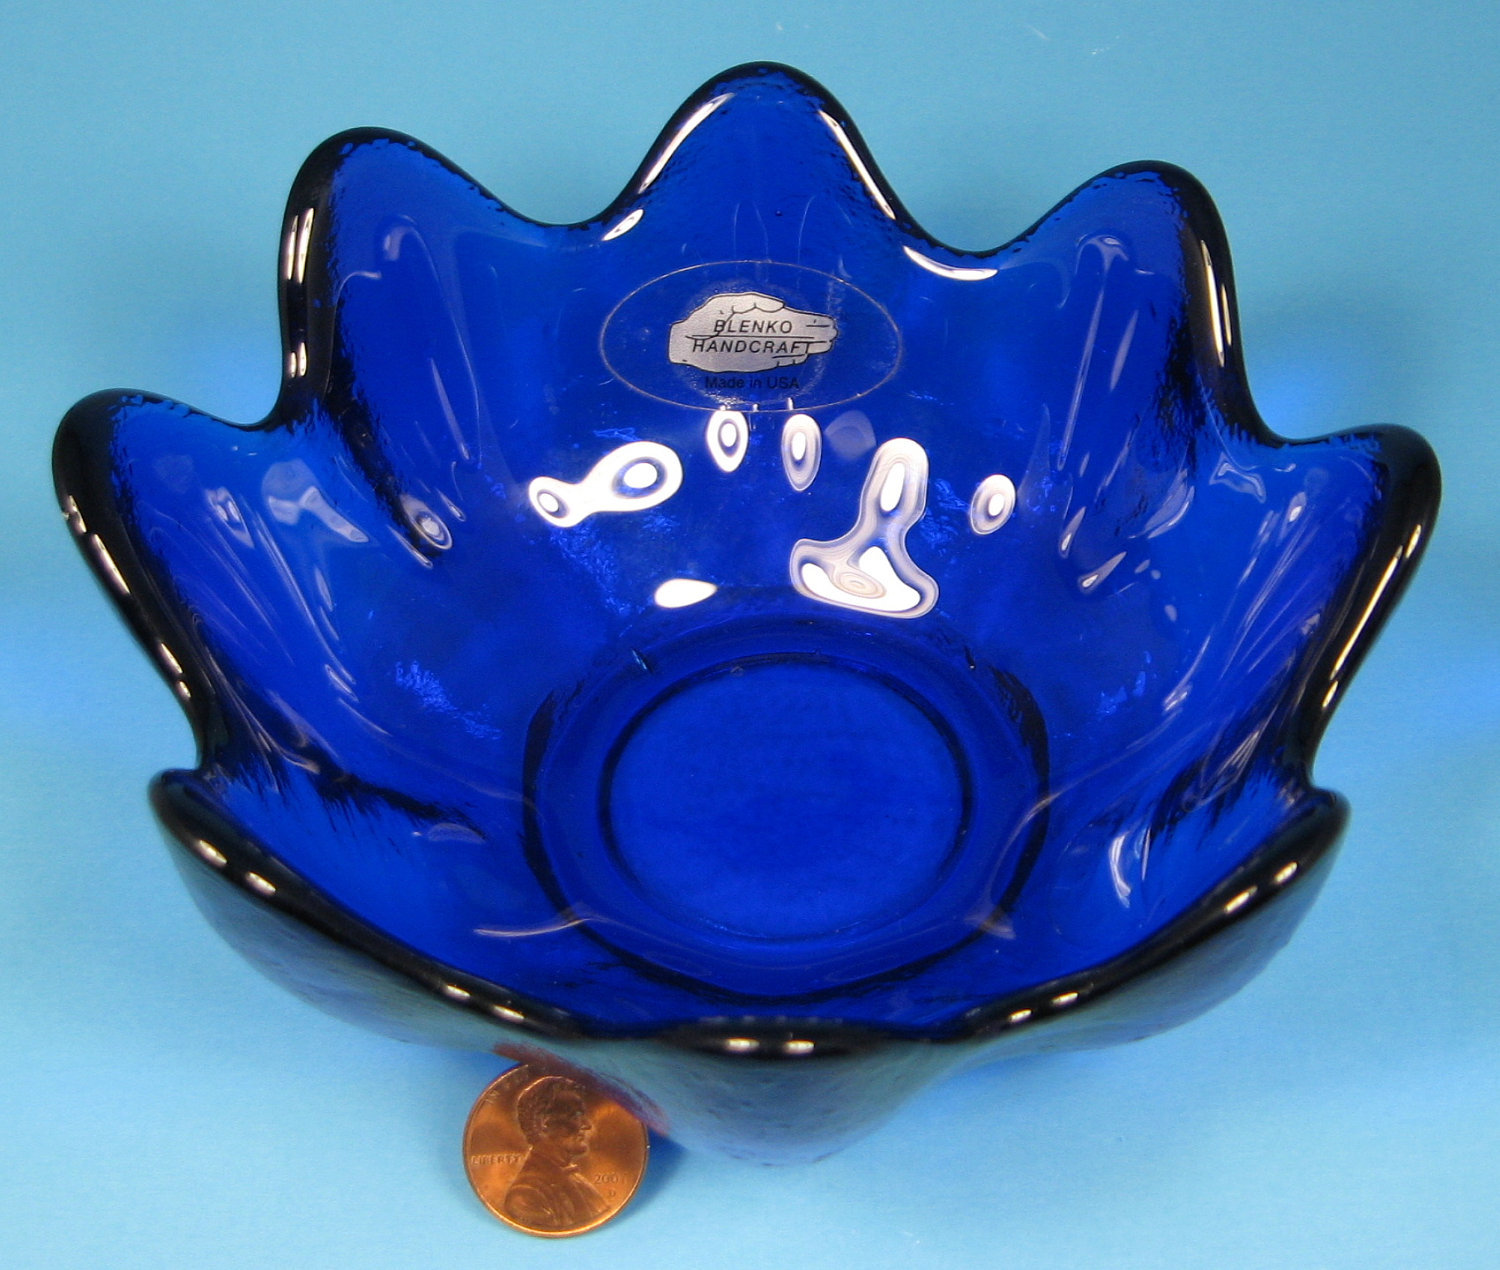 Blenko Cobalt Blue Art Glass Clover Bowl Original 5 5 Inch With Tag Husted 1970s Blenko